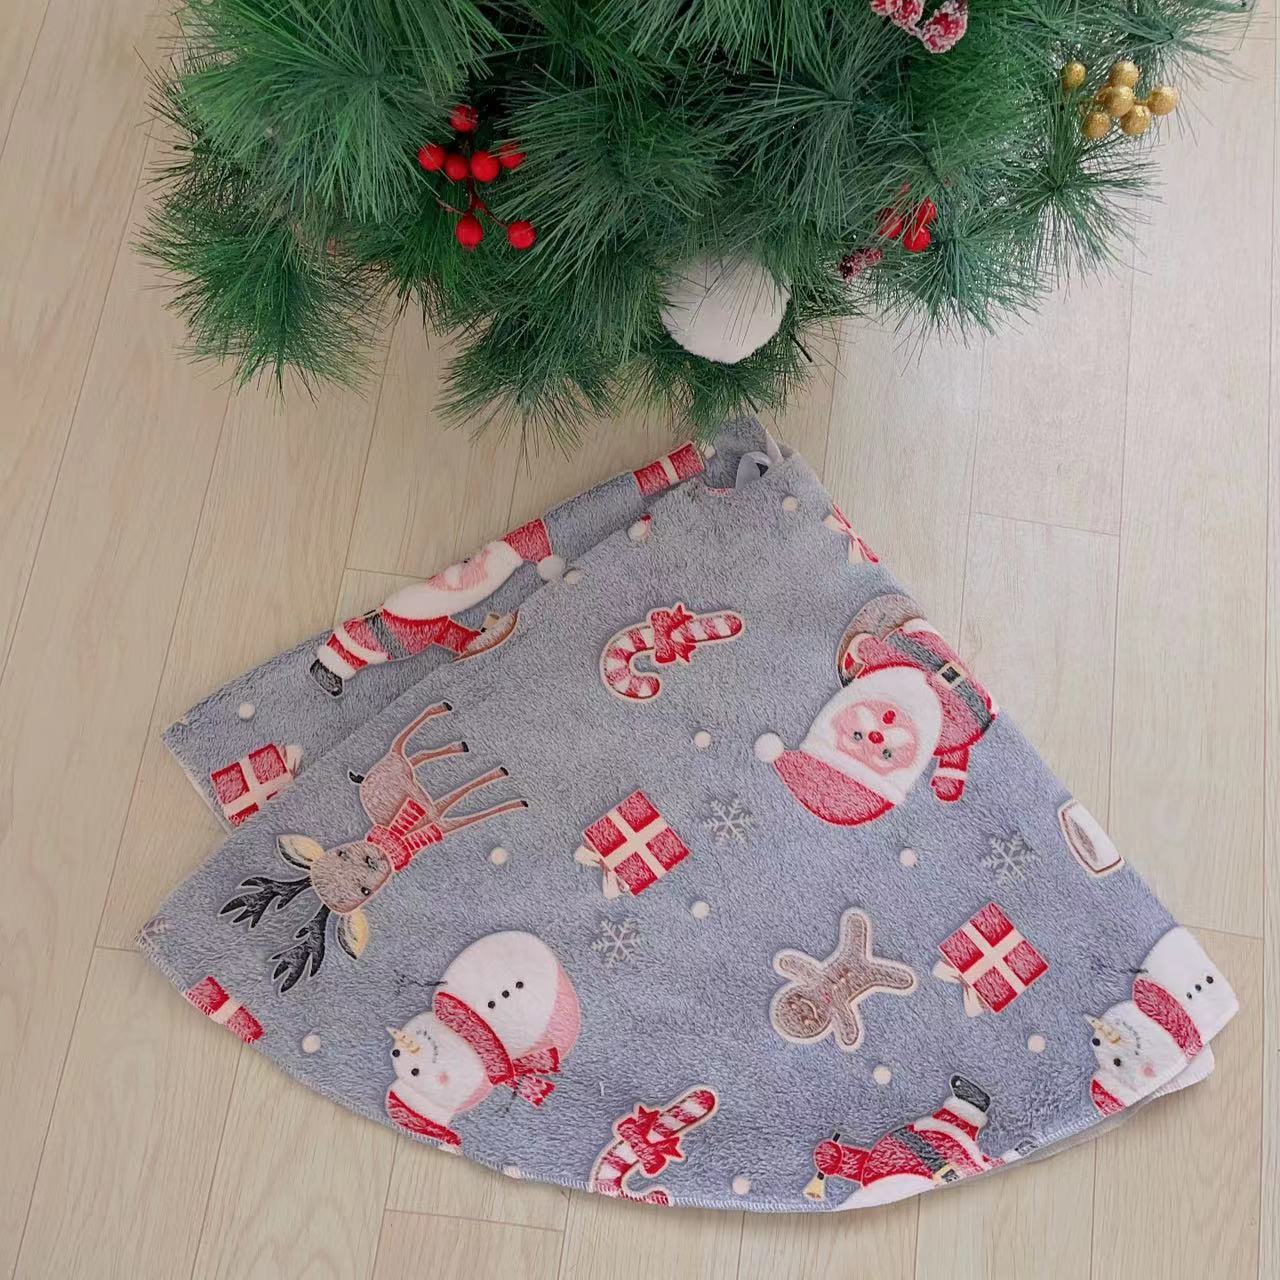 Medium size Christmas tree skirt-90CM